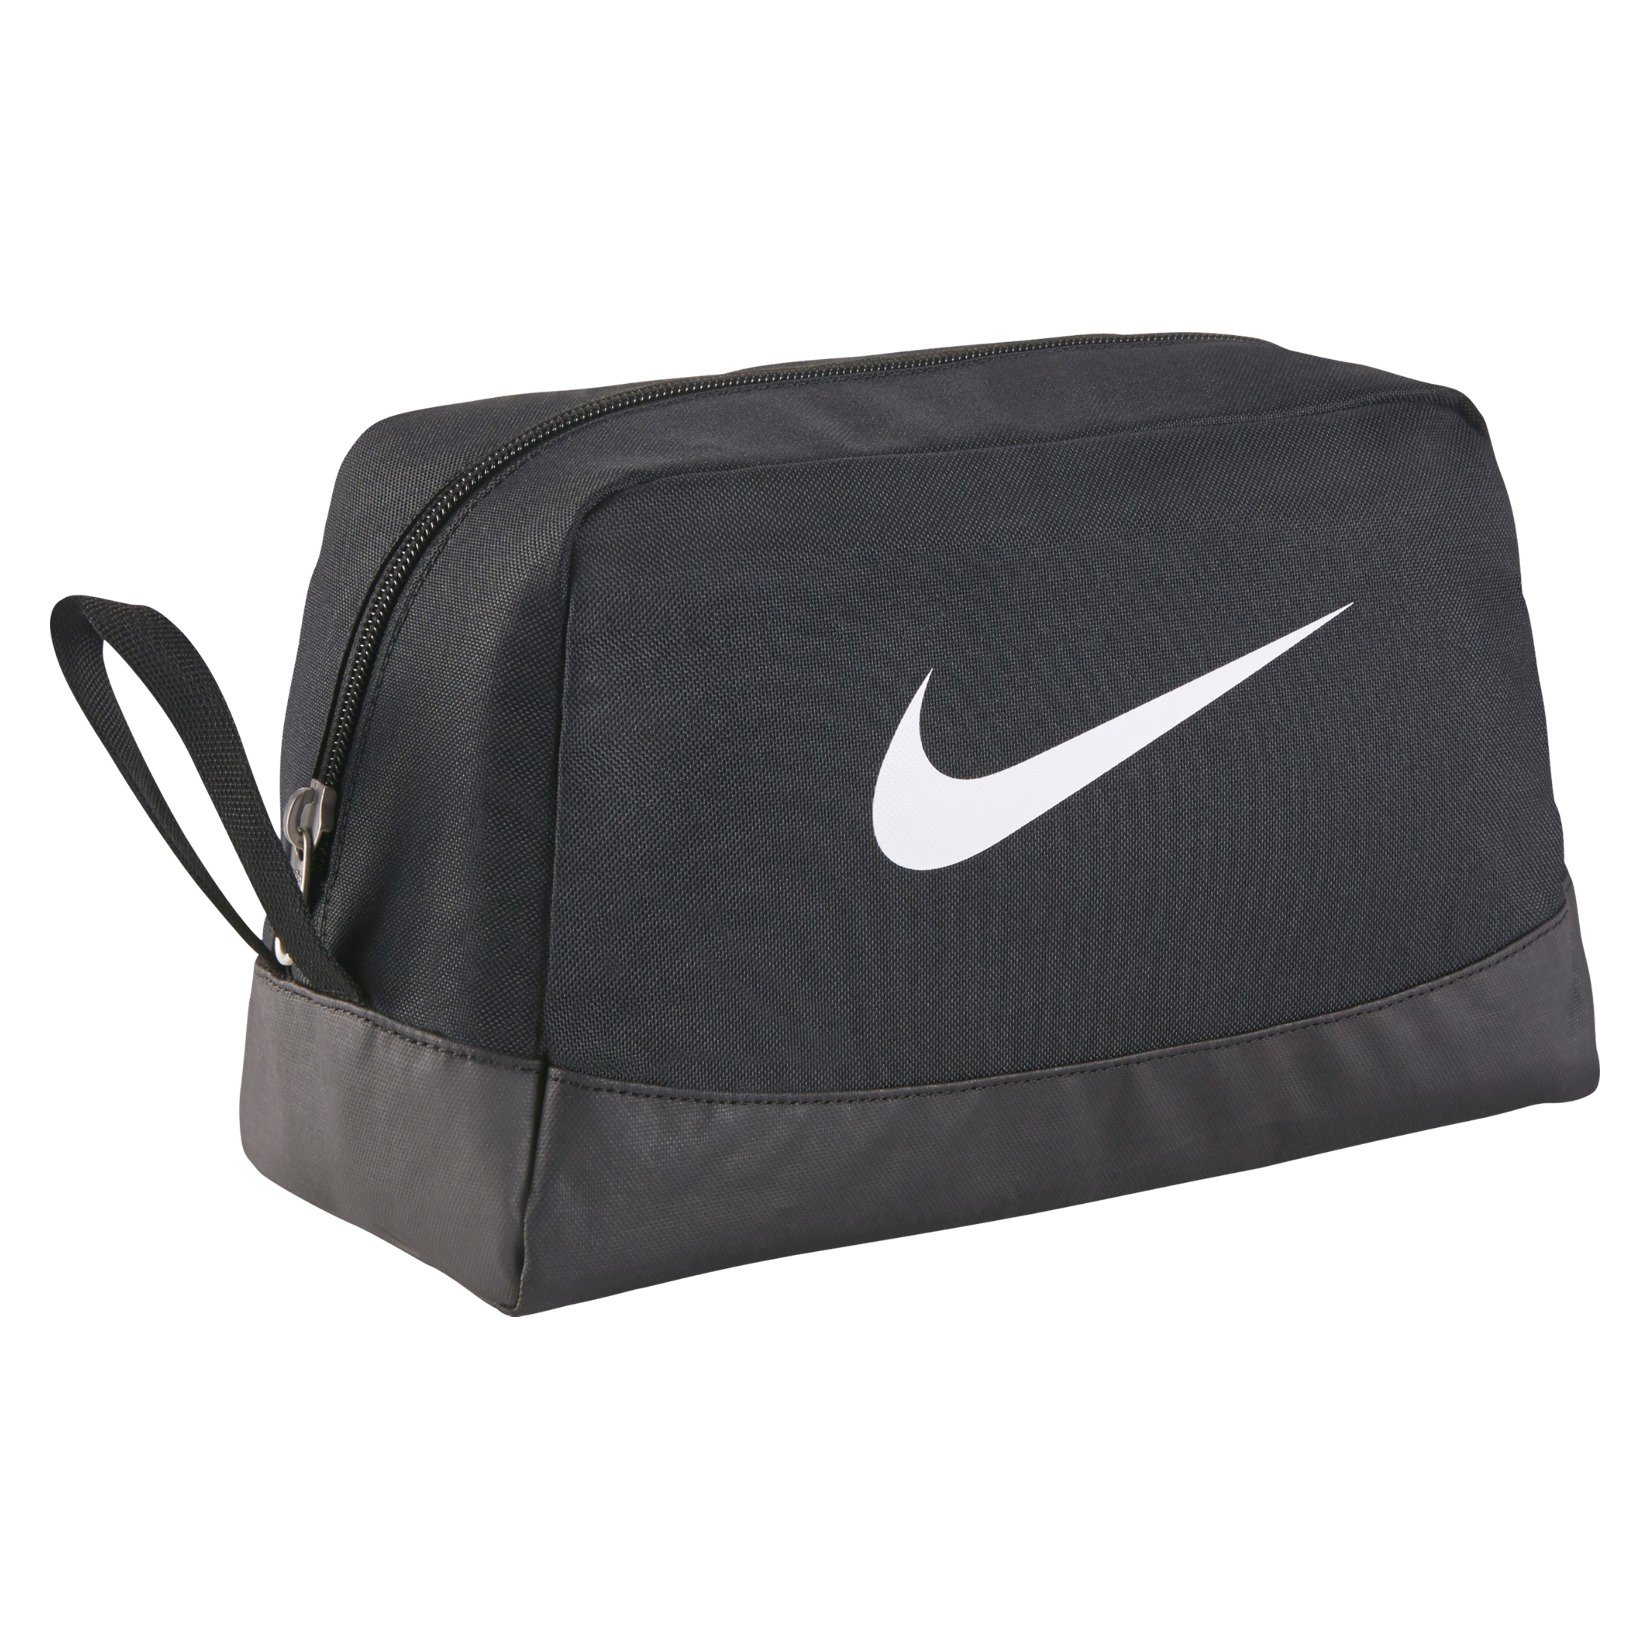 Nike NIKE CLUB TEAM SWOOSH TOILETRY BAG 3.0